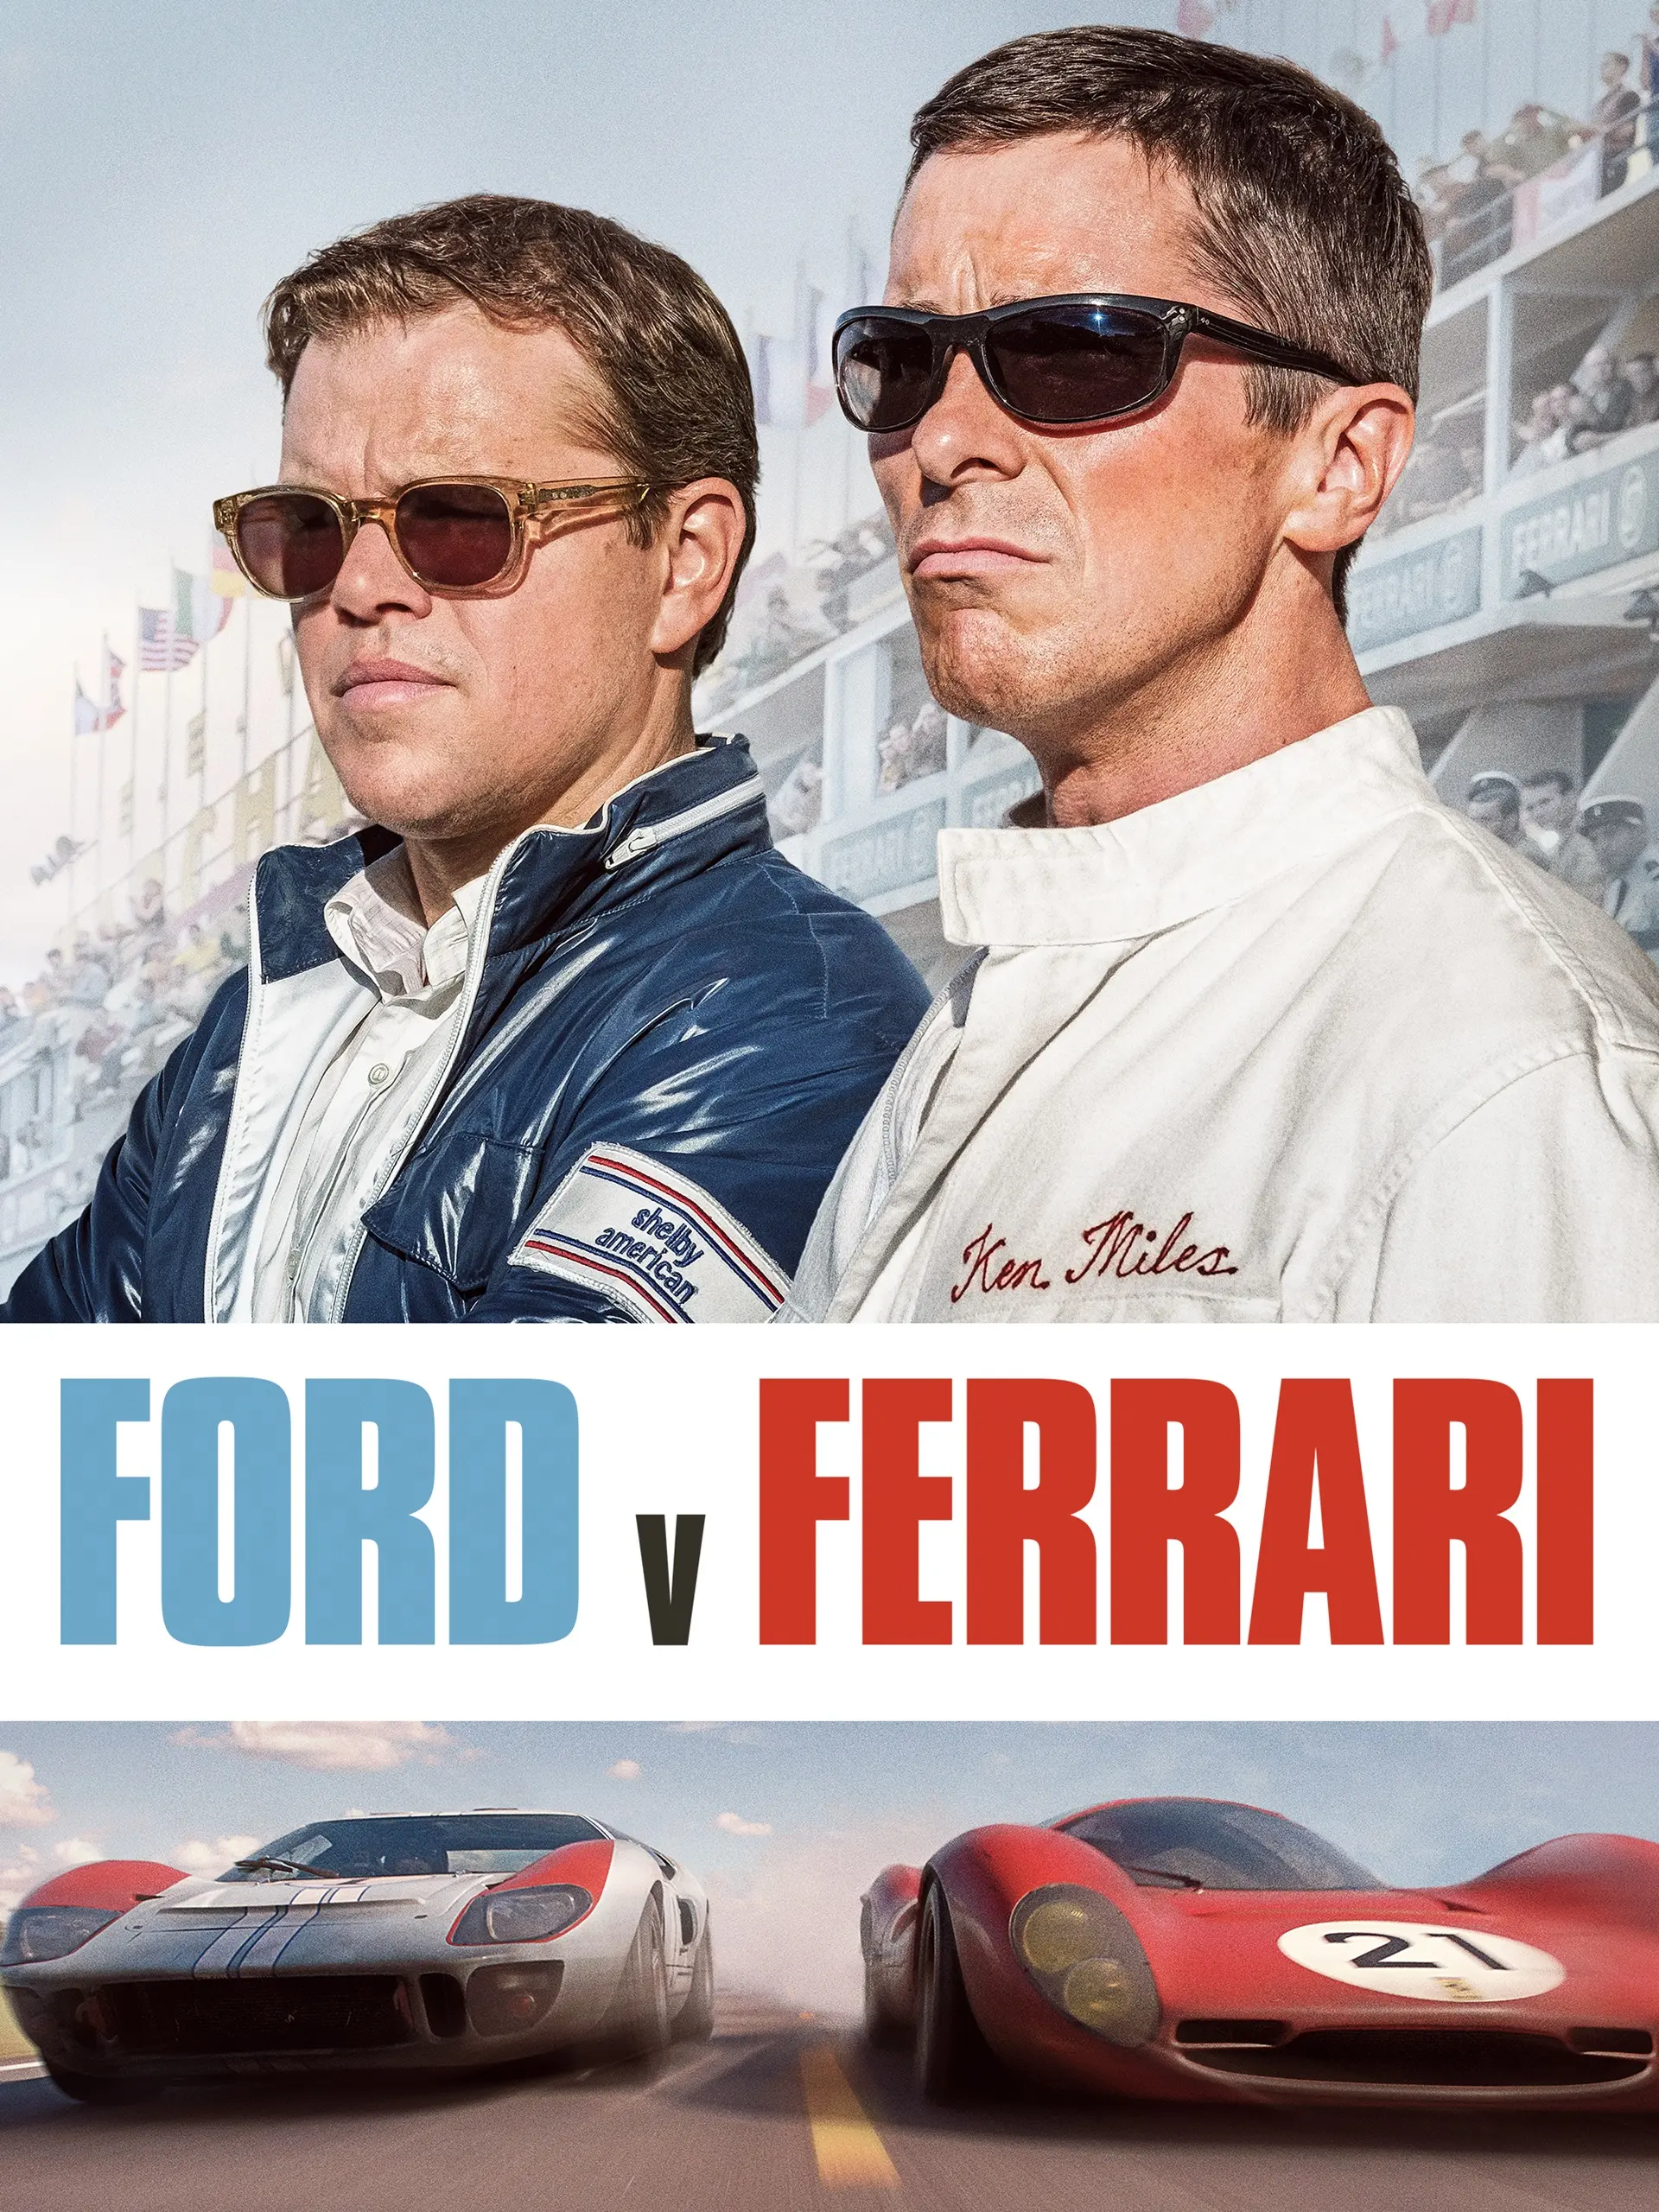 estreno ford vs ferrari - Dónde encuentro la película de Ford vs Ferrari